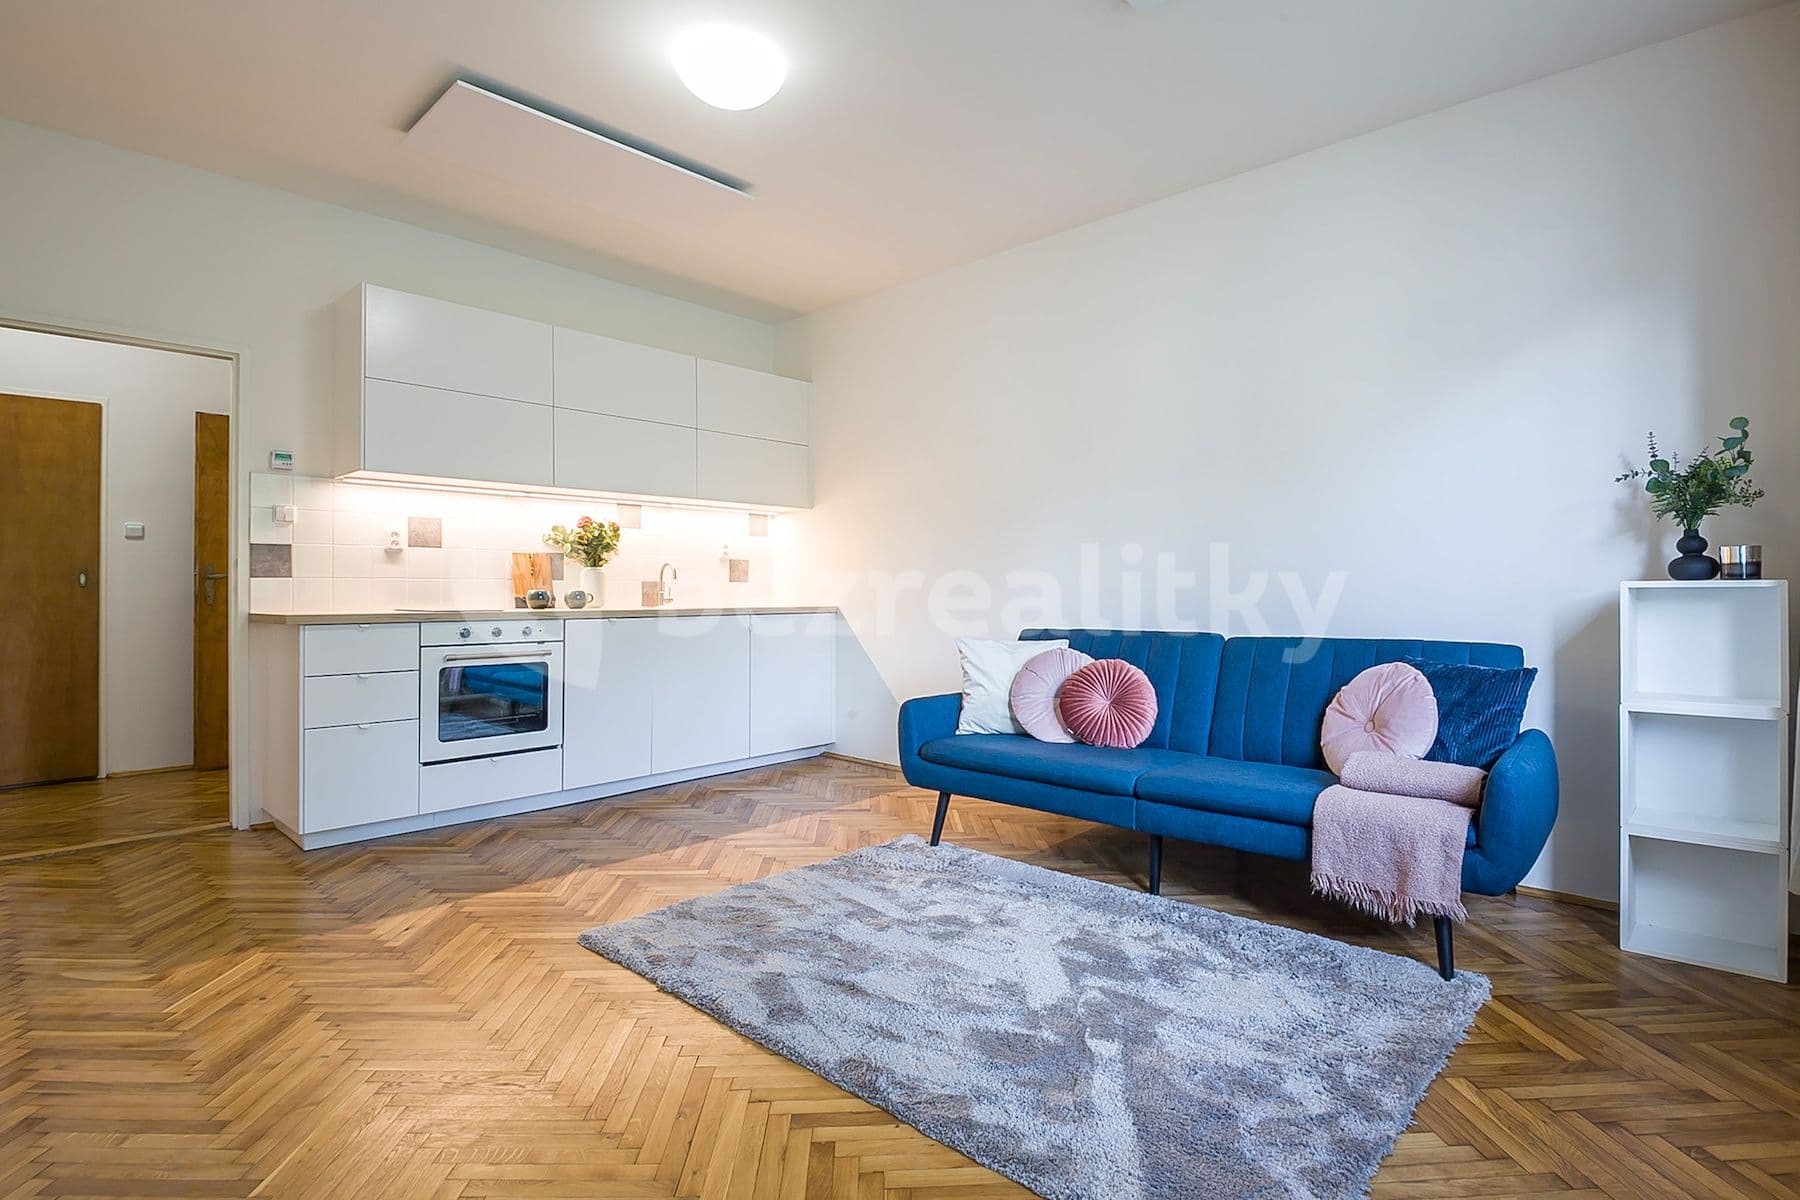 1 bedroom with open-plan kitchen flat for sale, 47 m², Krátká, Prague, Prague